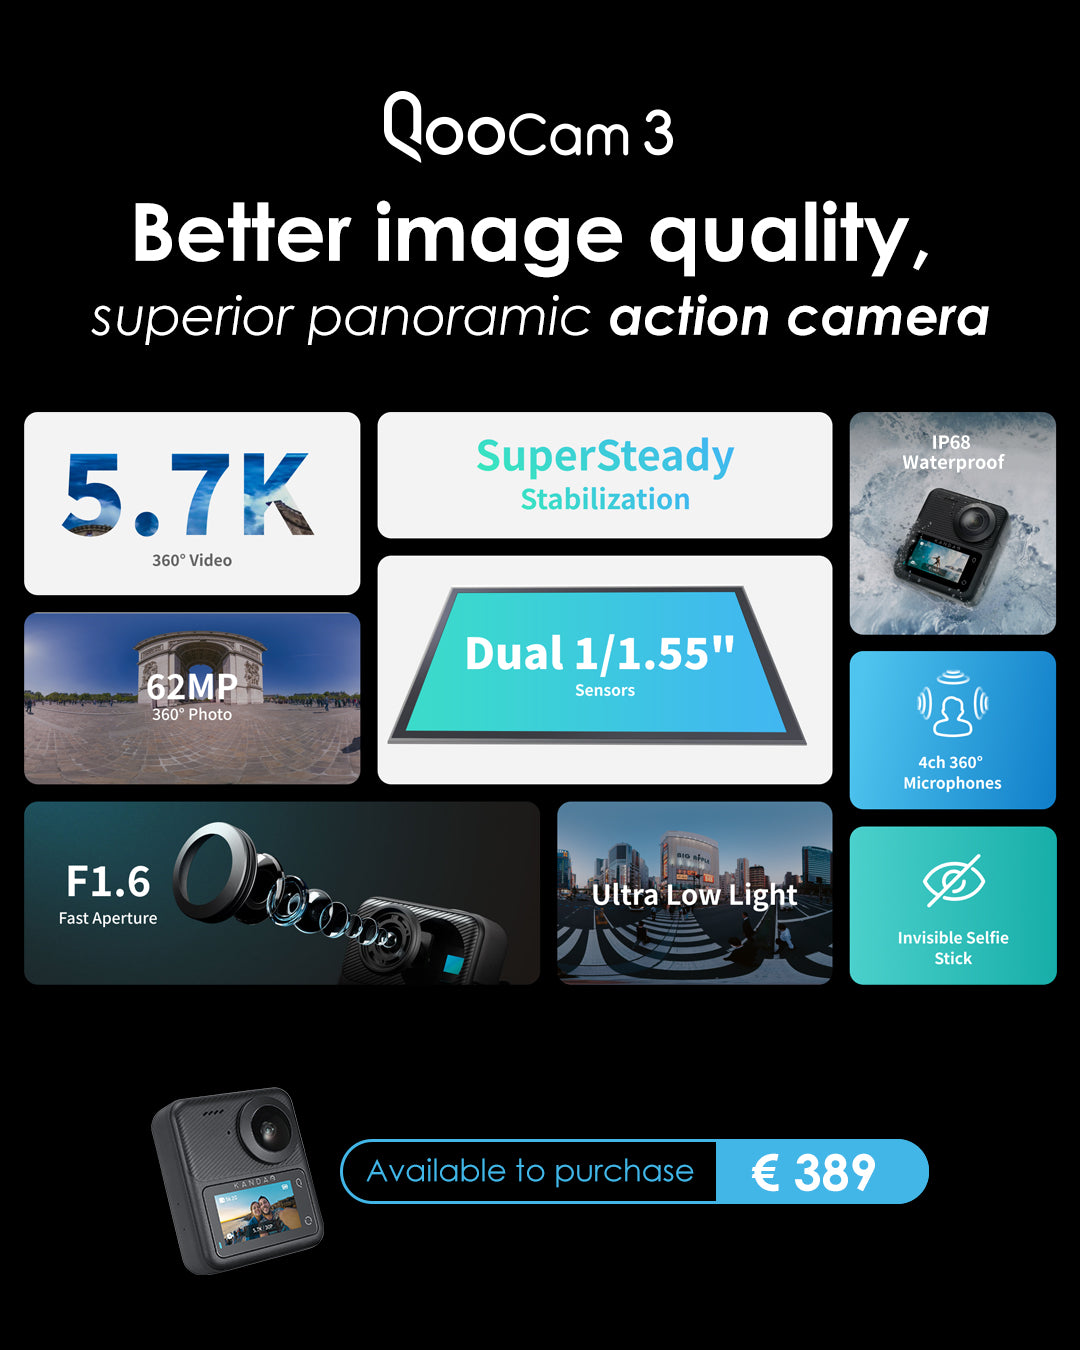 Kandao Releases QooCam3-A 360 Action Camera with Superior Image Quality